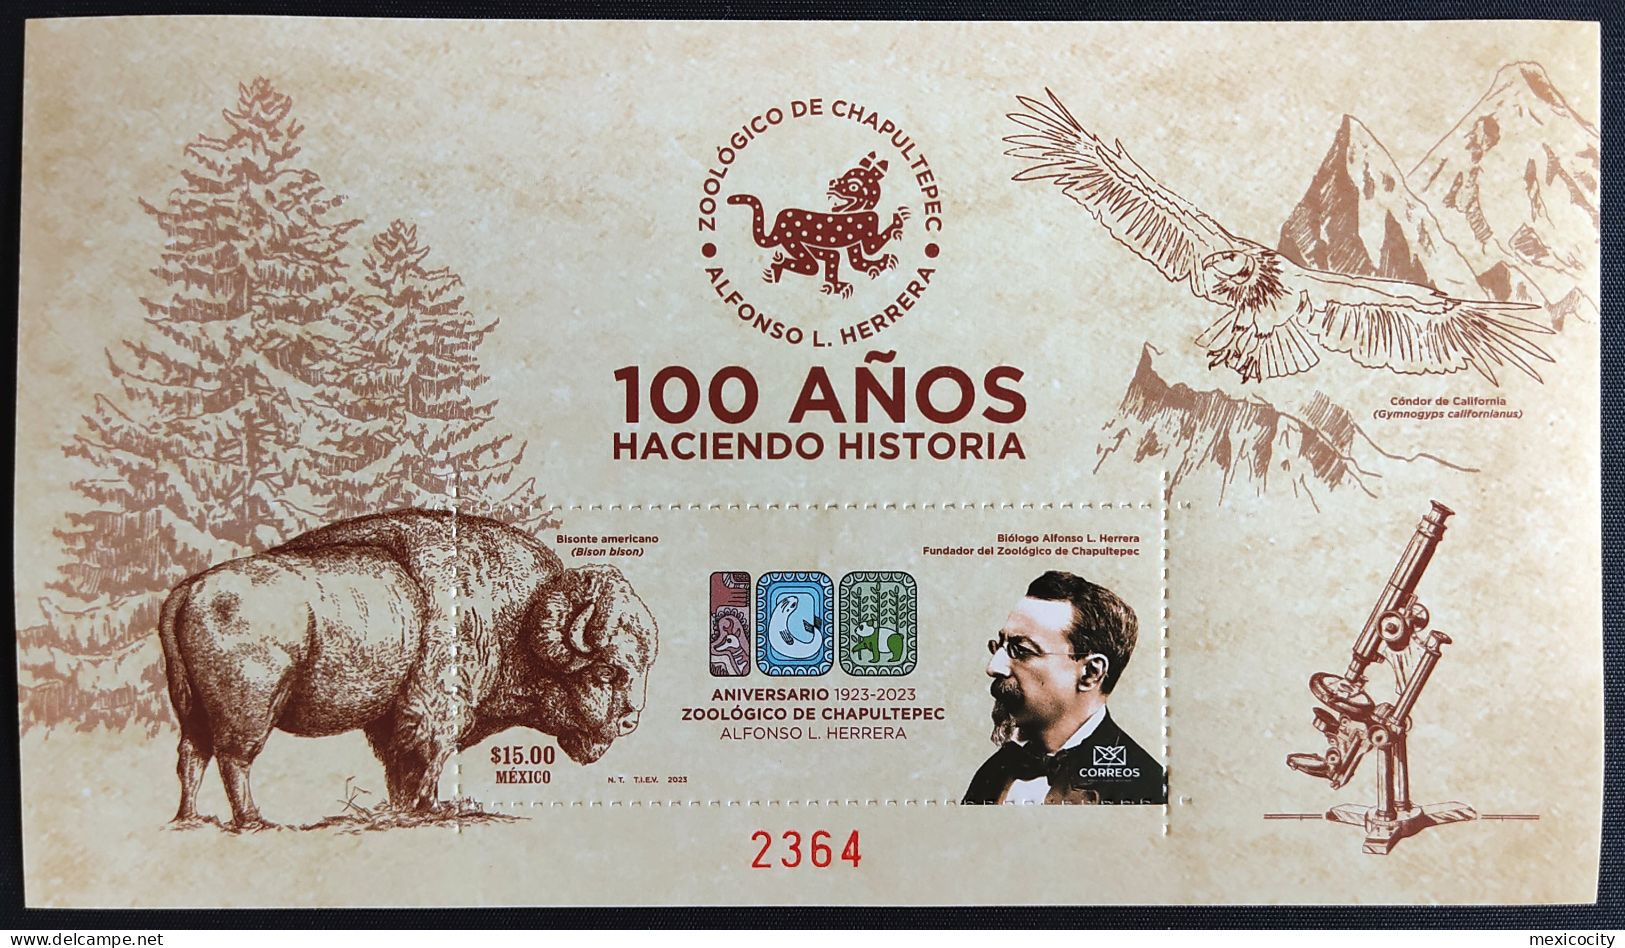 MEXICO 2023 CHAP. ZOO Anniv. LTD. DIAMANTÉ BLOC COLLECTORS Mint NH Unm., Rare, Few Offered To Sell - Mexico